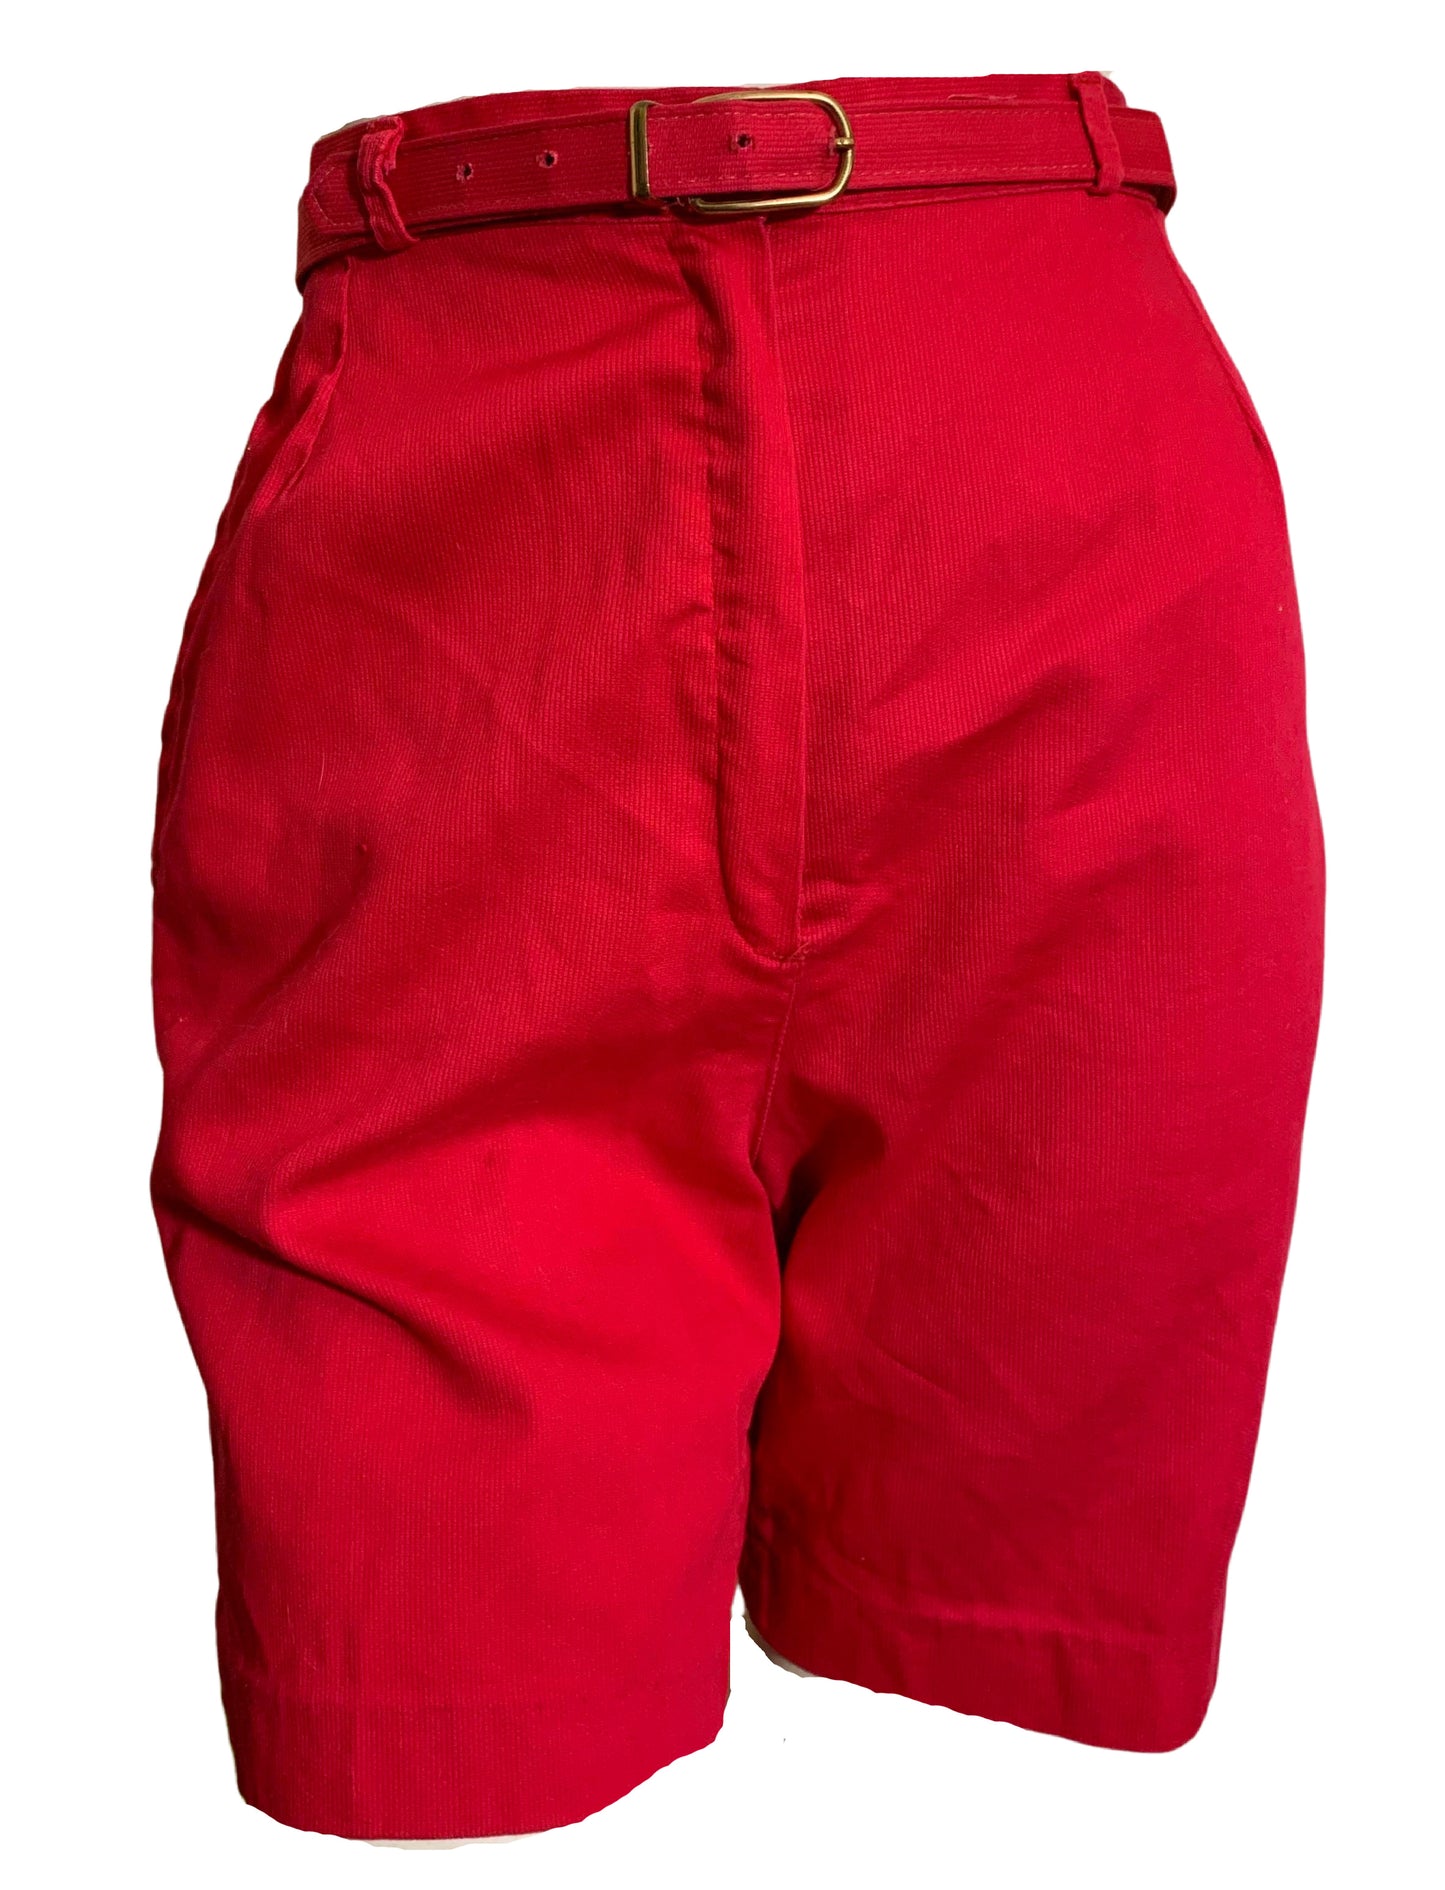 Cherry Red Cotton High Waist Shorts circa 1960s